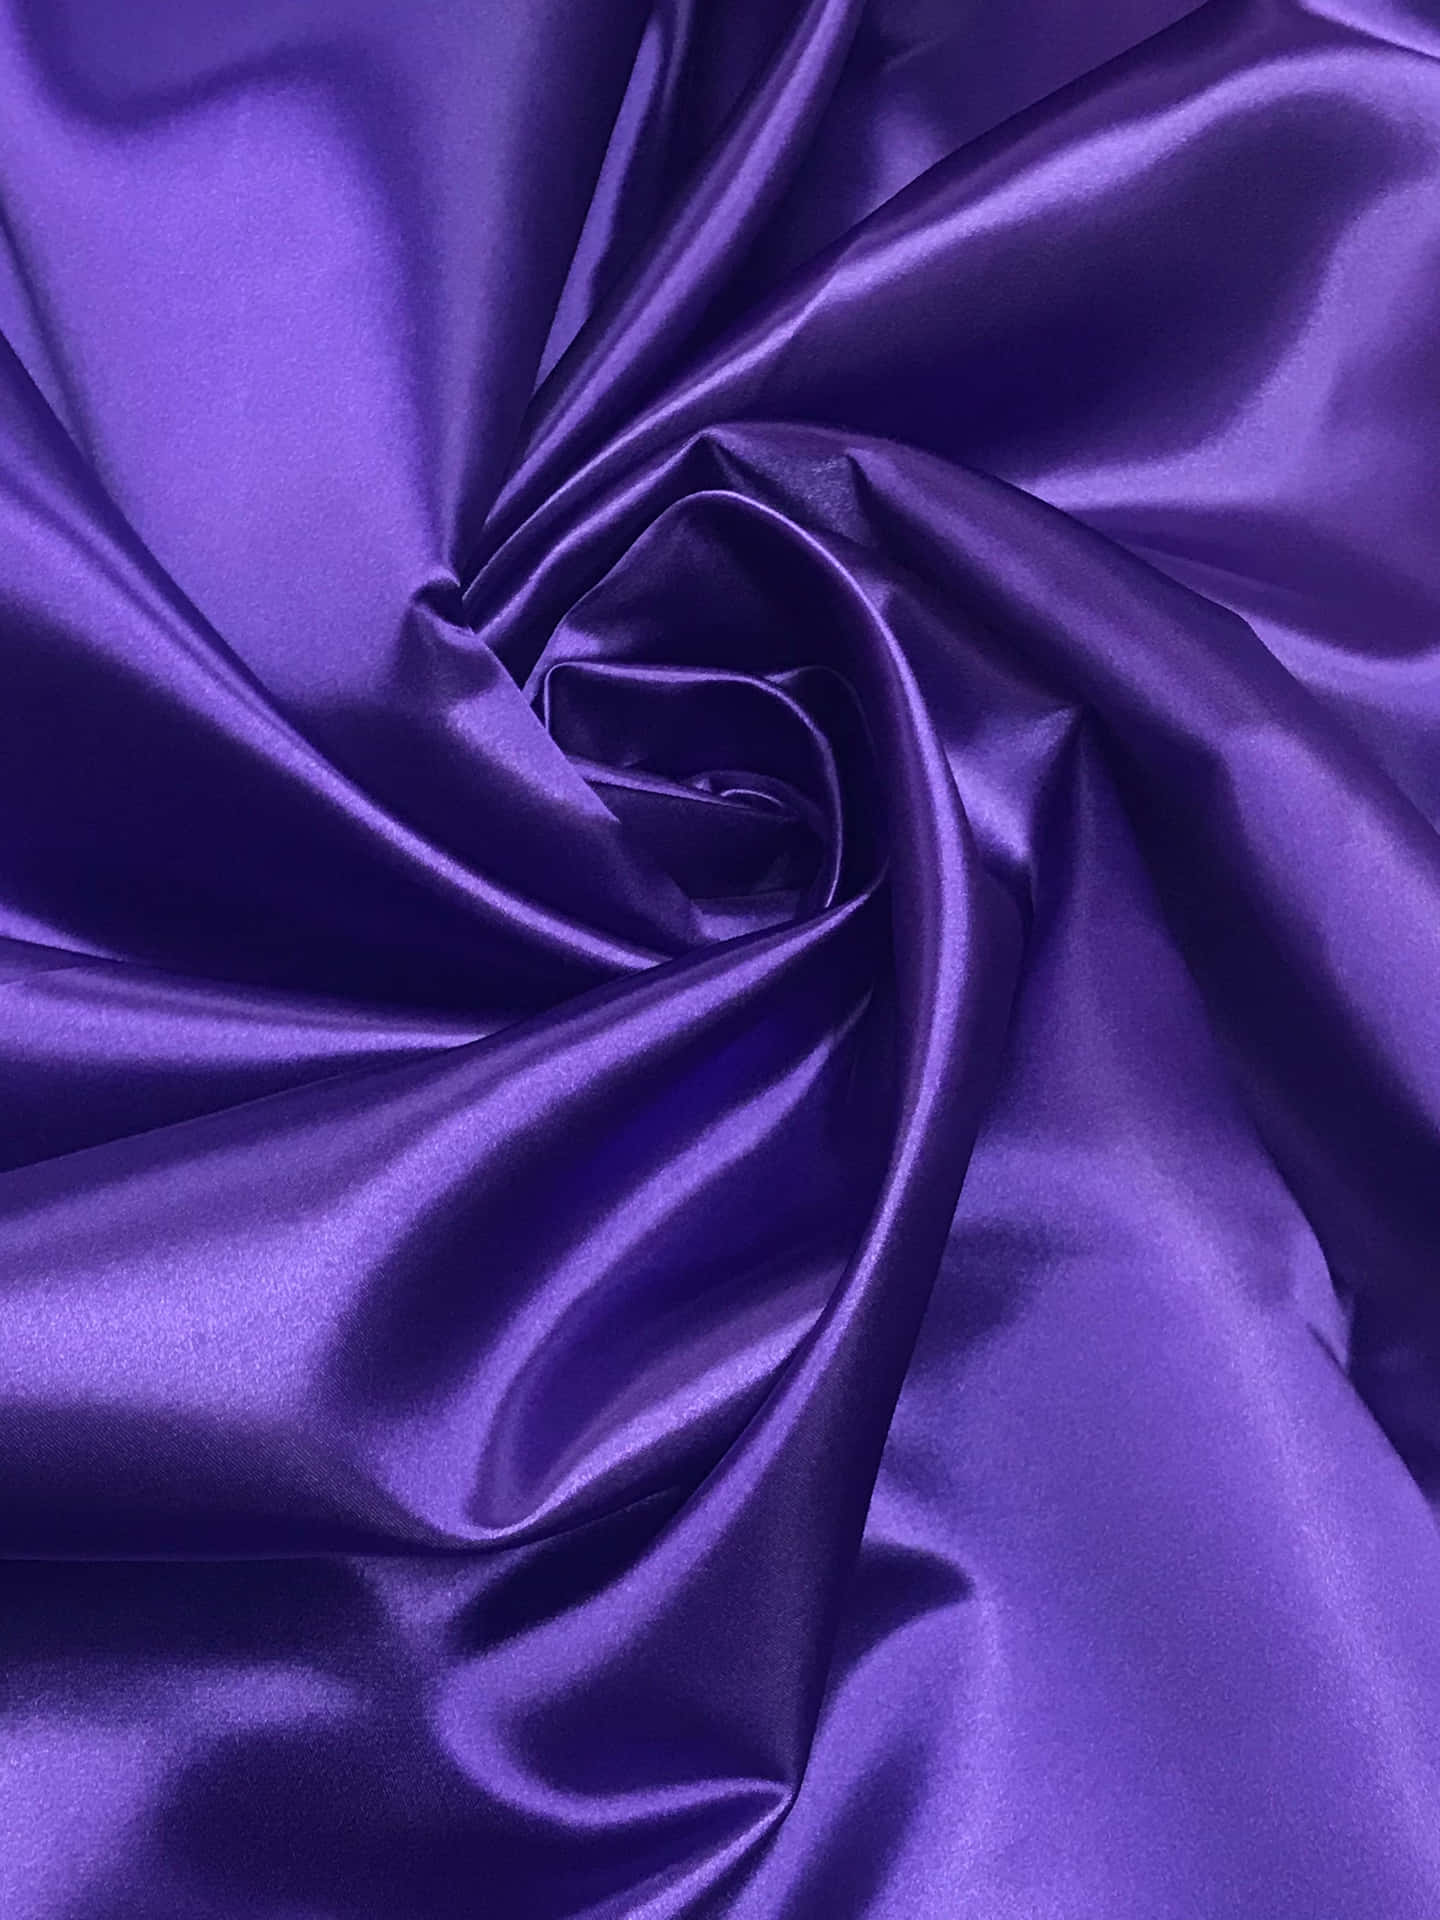 Luxuriously textured Purple Satin Fabric Wallpaper